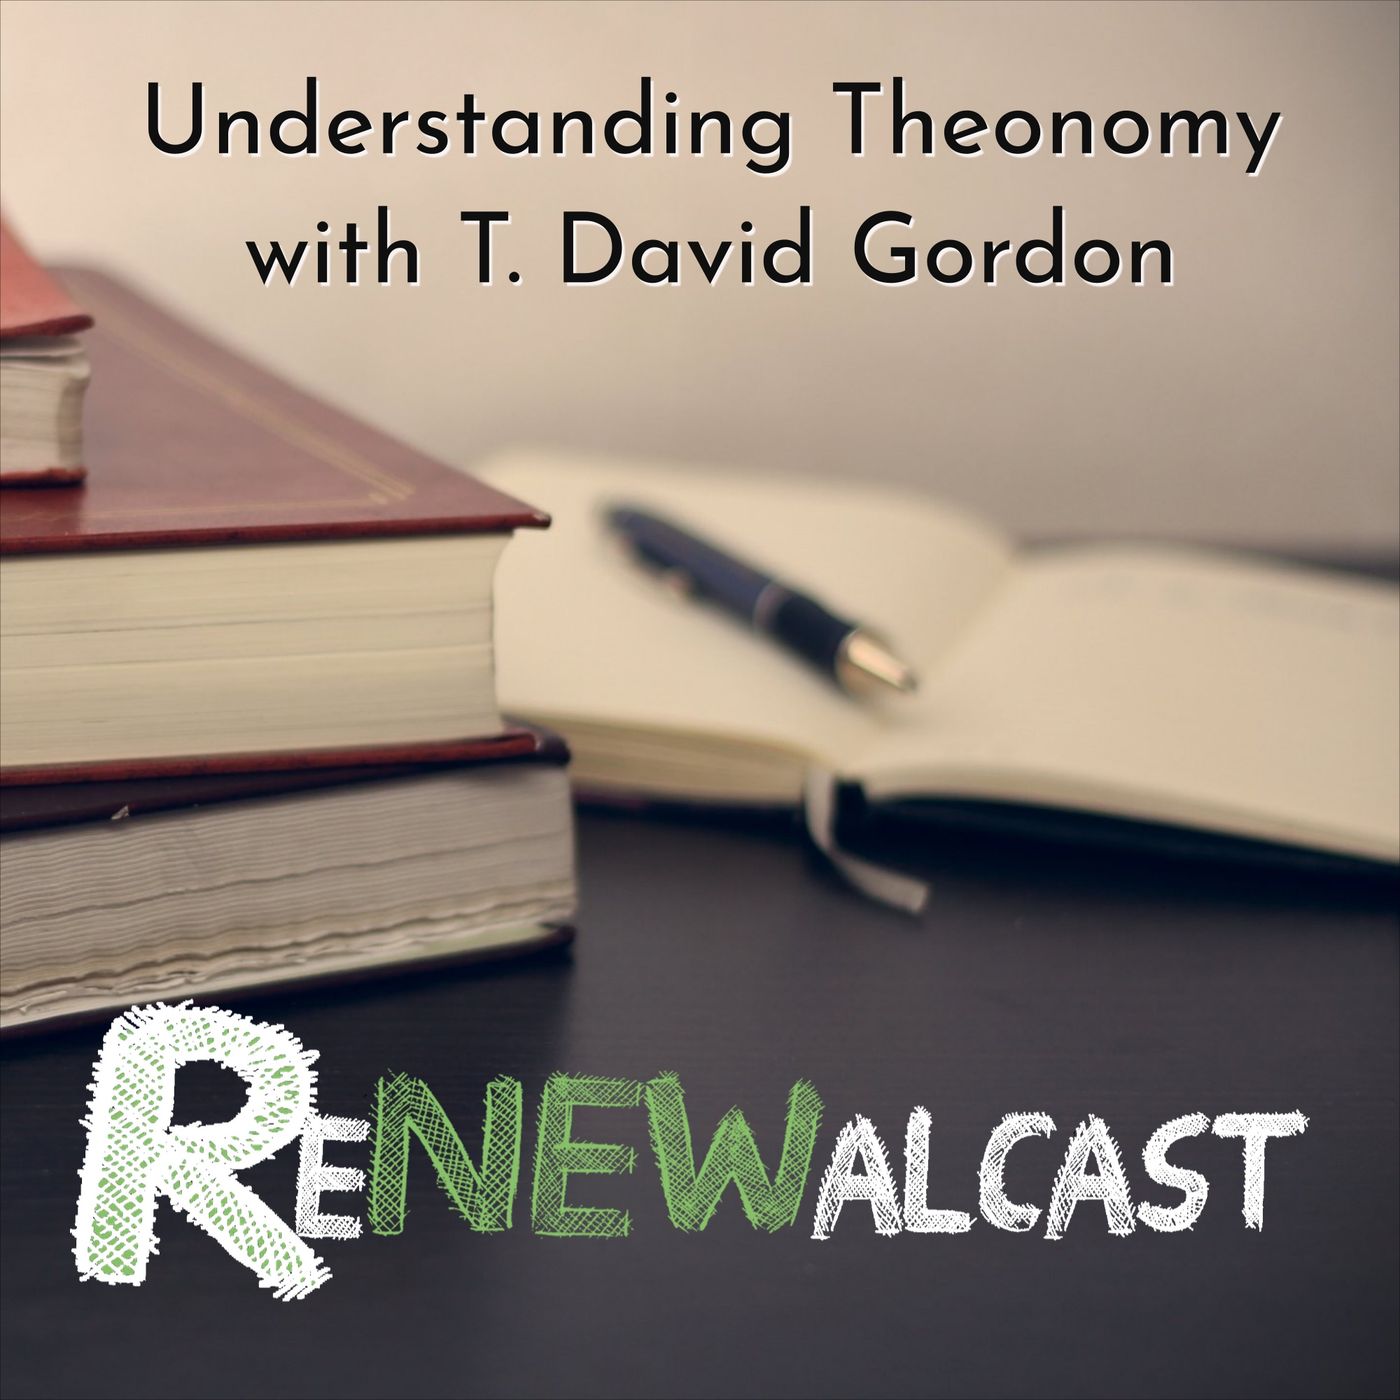 Understanding Theonomy with T. David Gordon